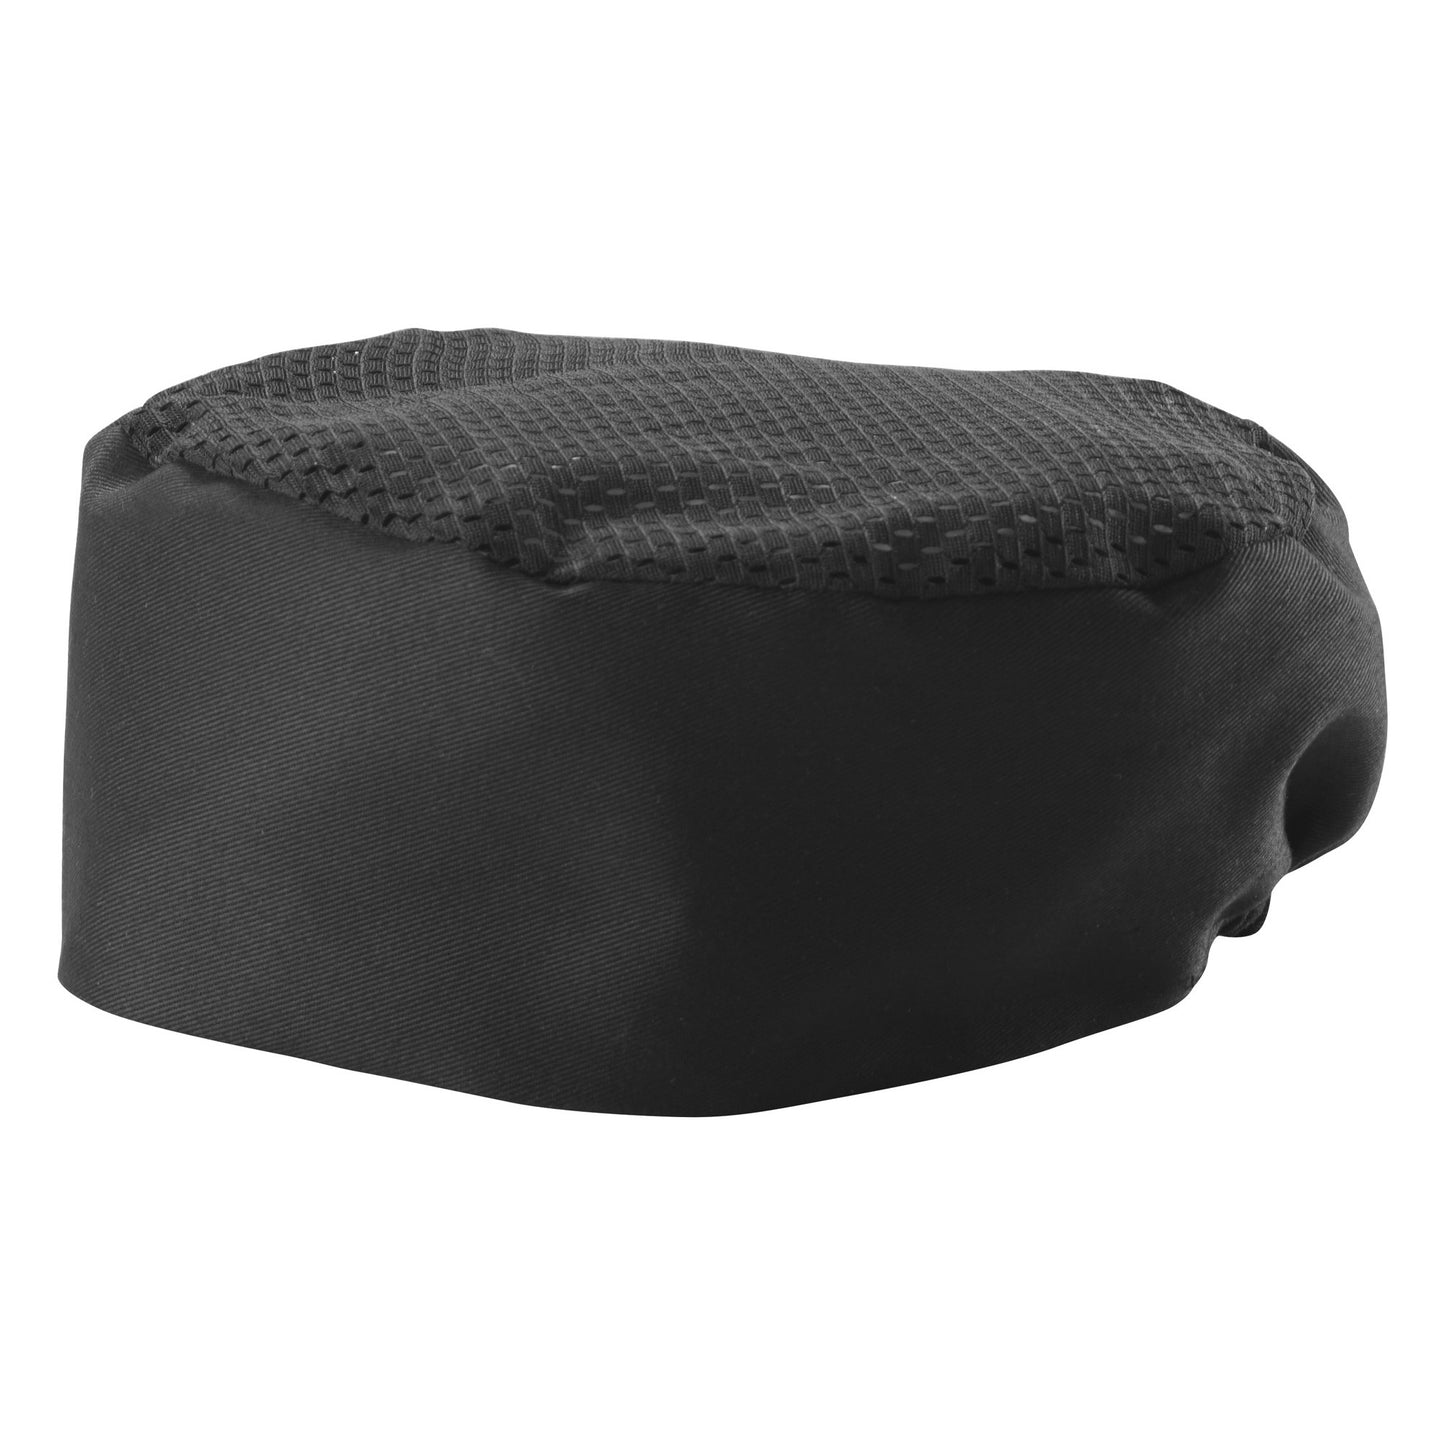 CHPB-3BX - Ventilated Pillbox Hats - Black, Large